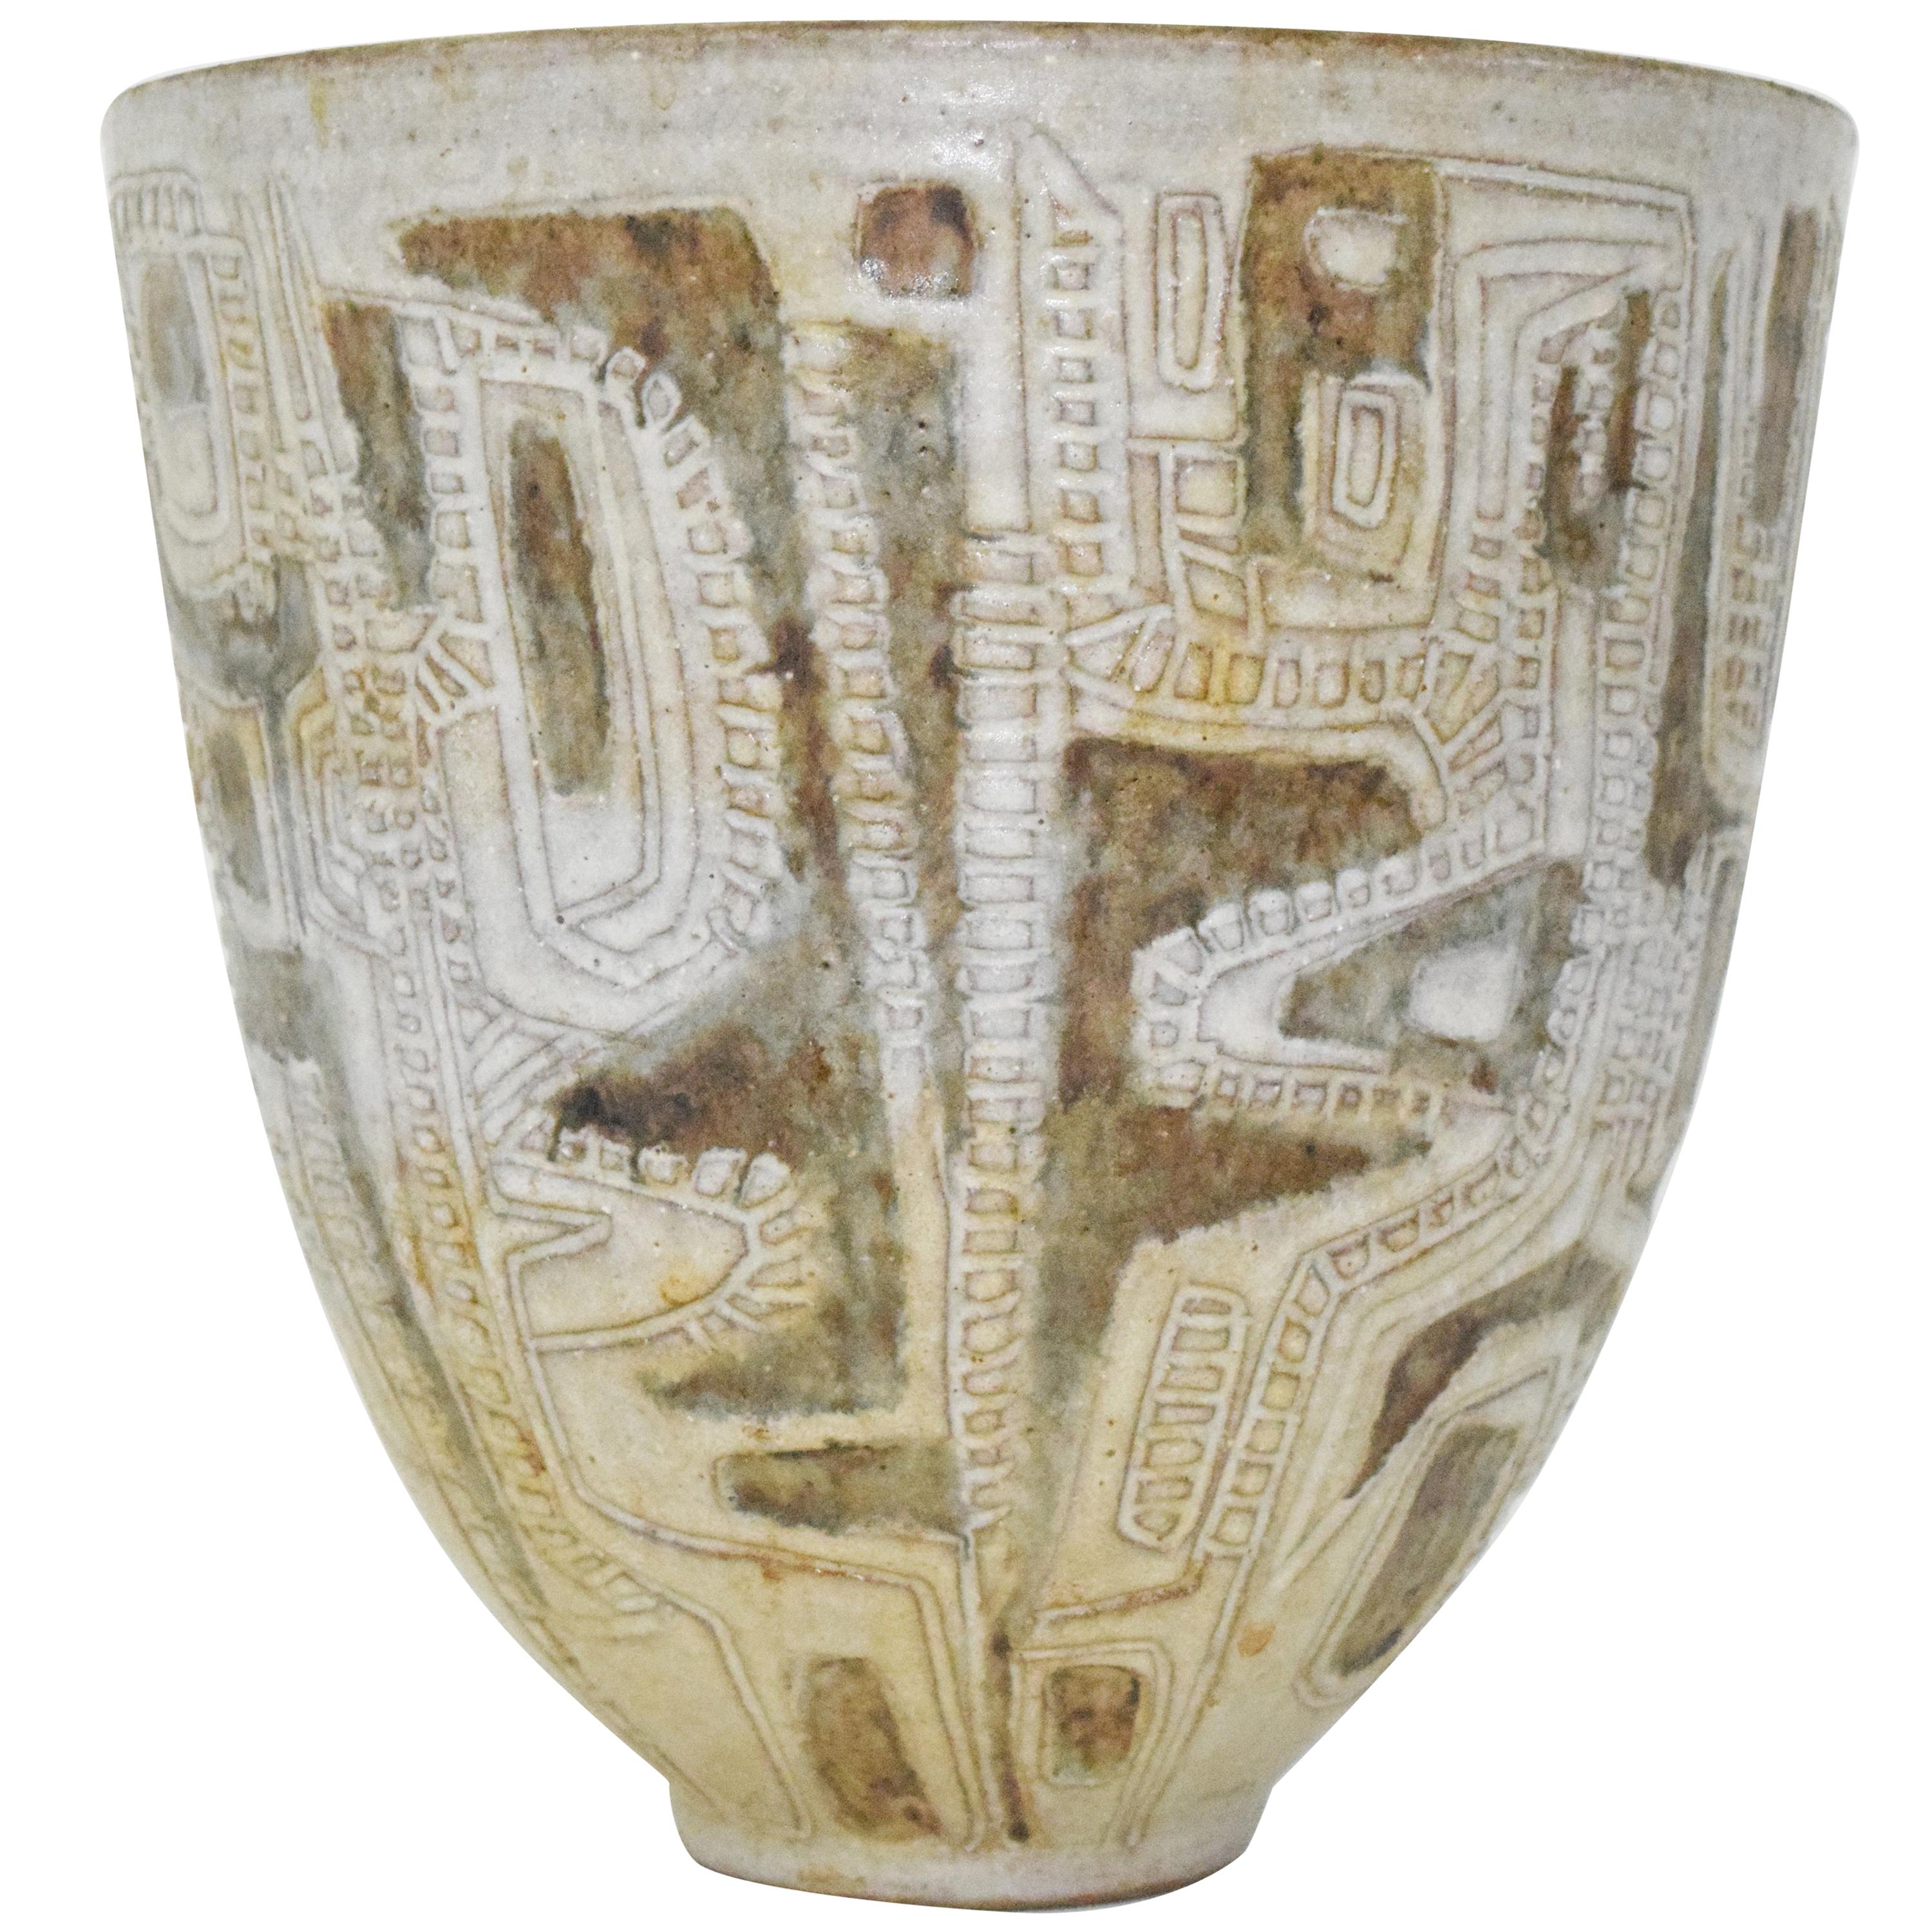 Clyde Burt Ceramic Vase or Vessel with Sgraffito